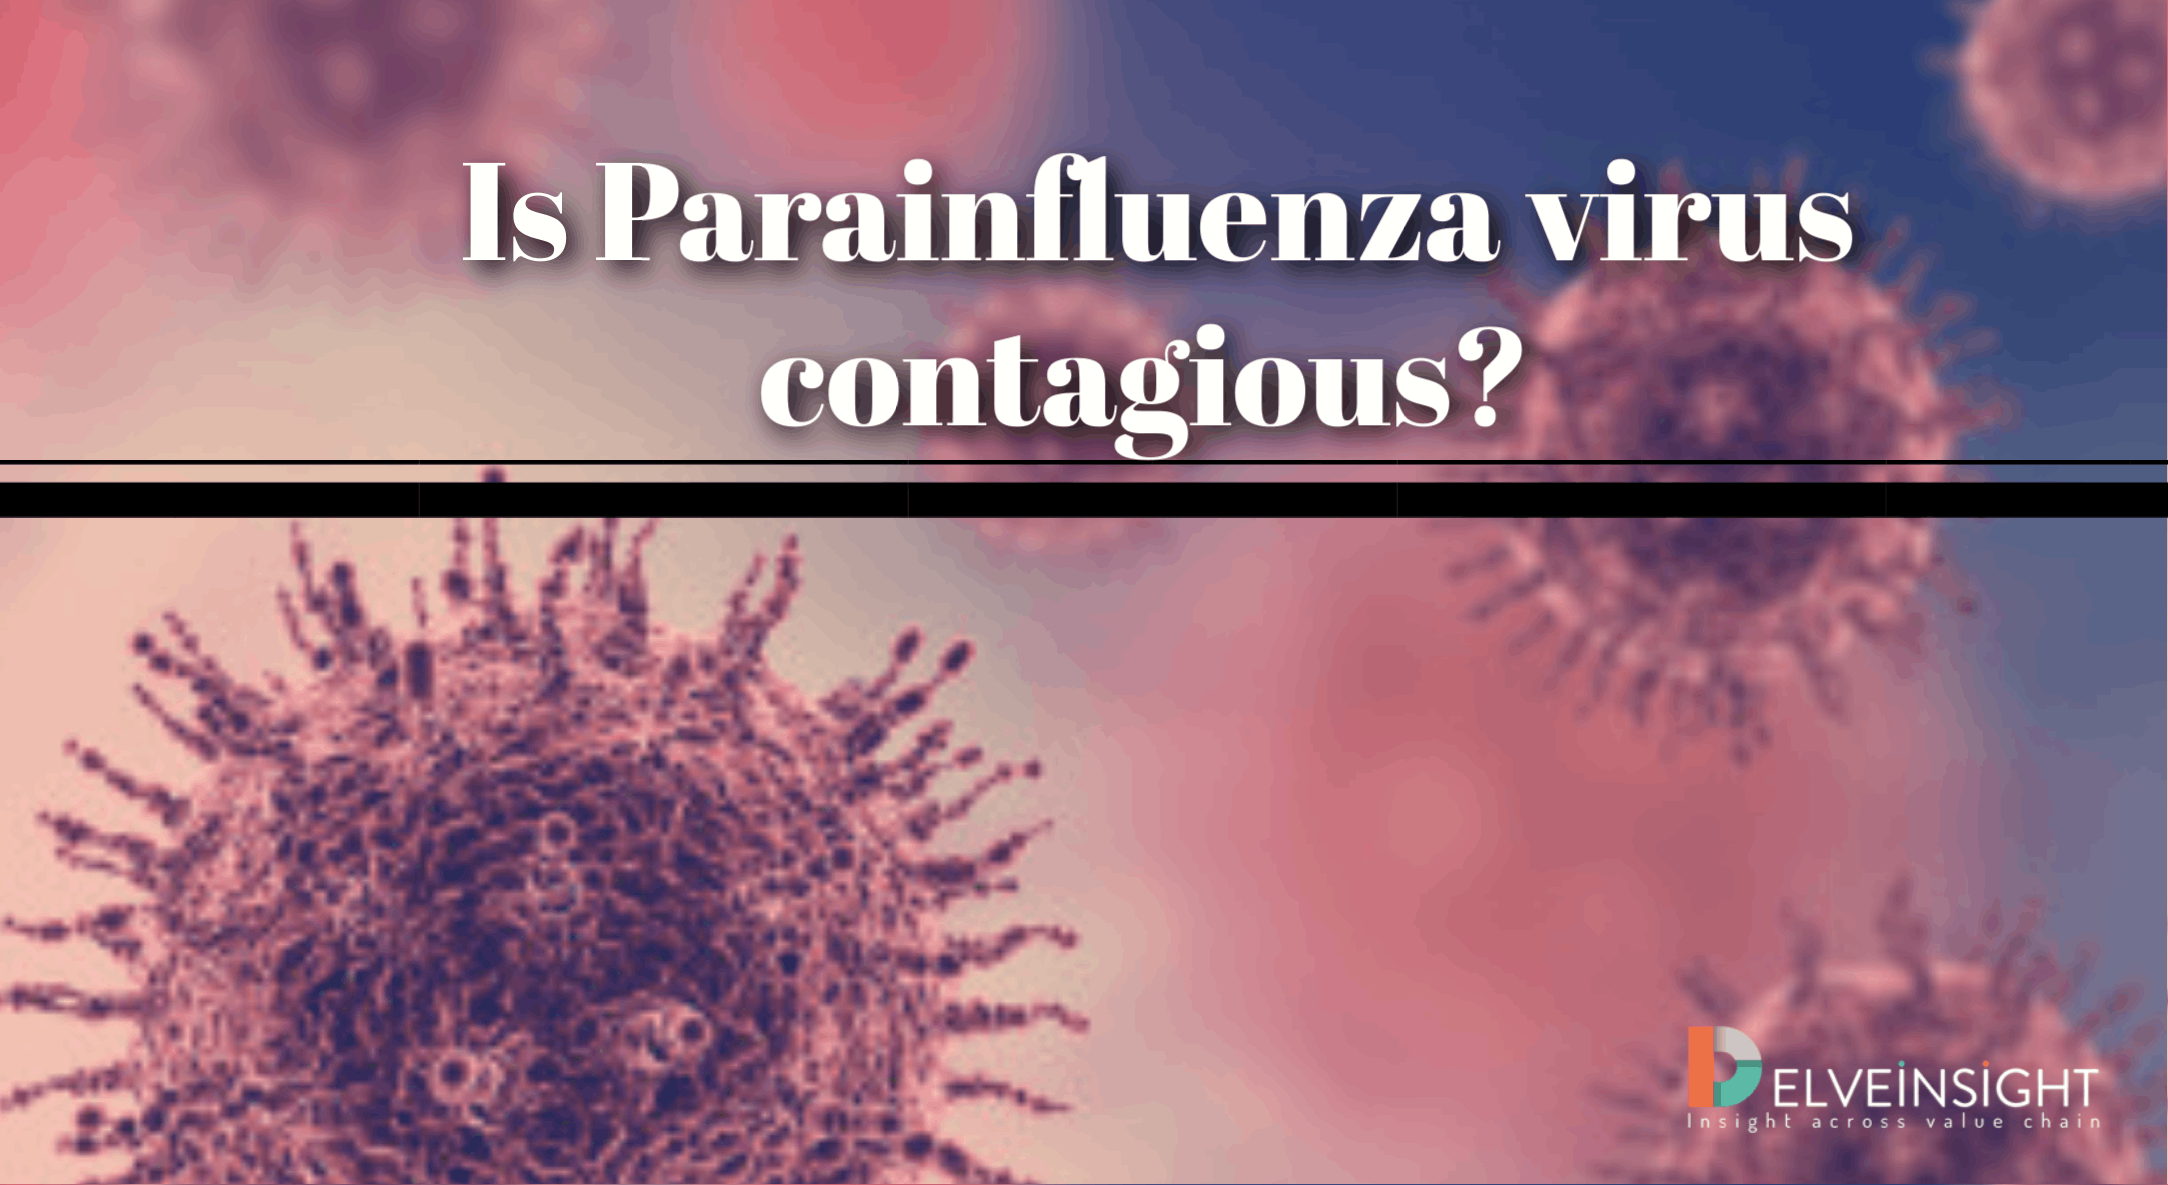 Parainfluenza virus infection market